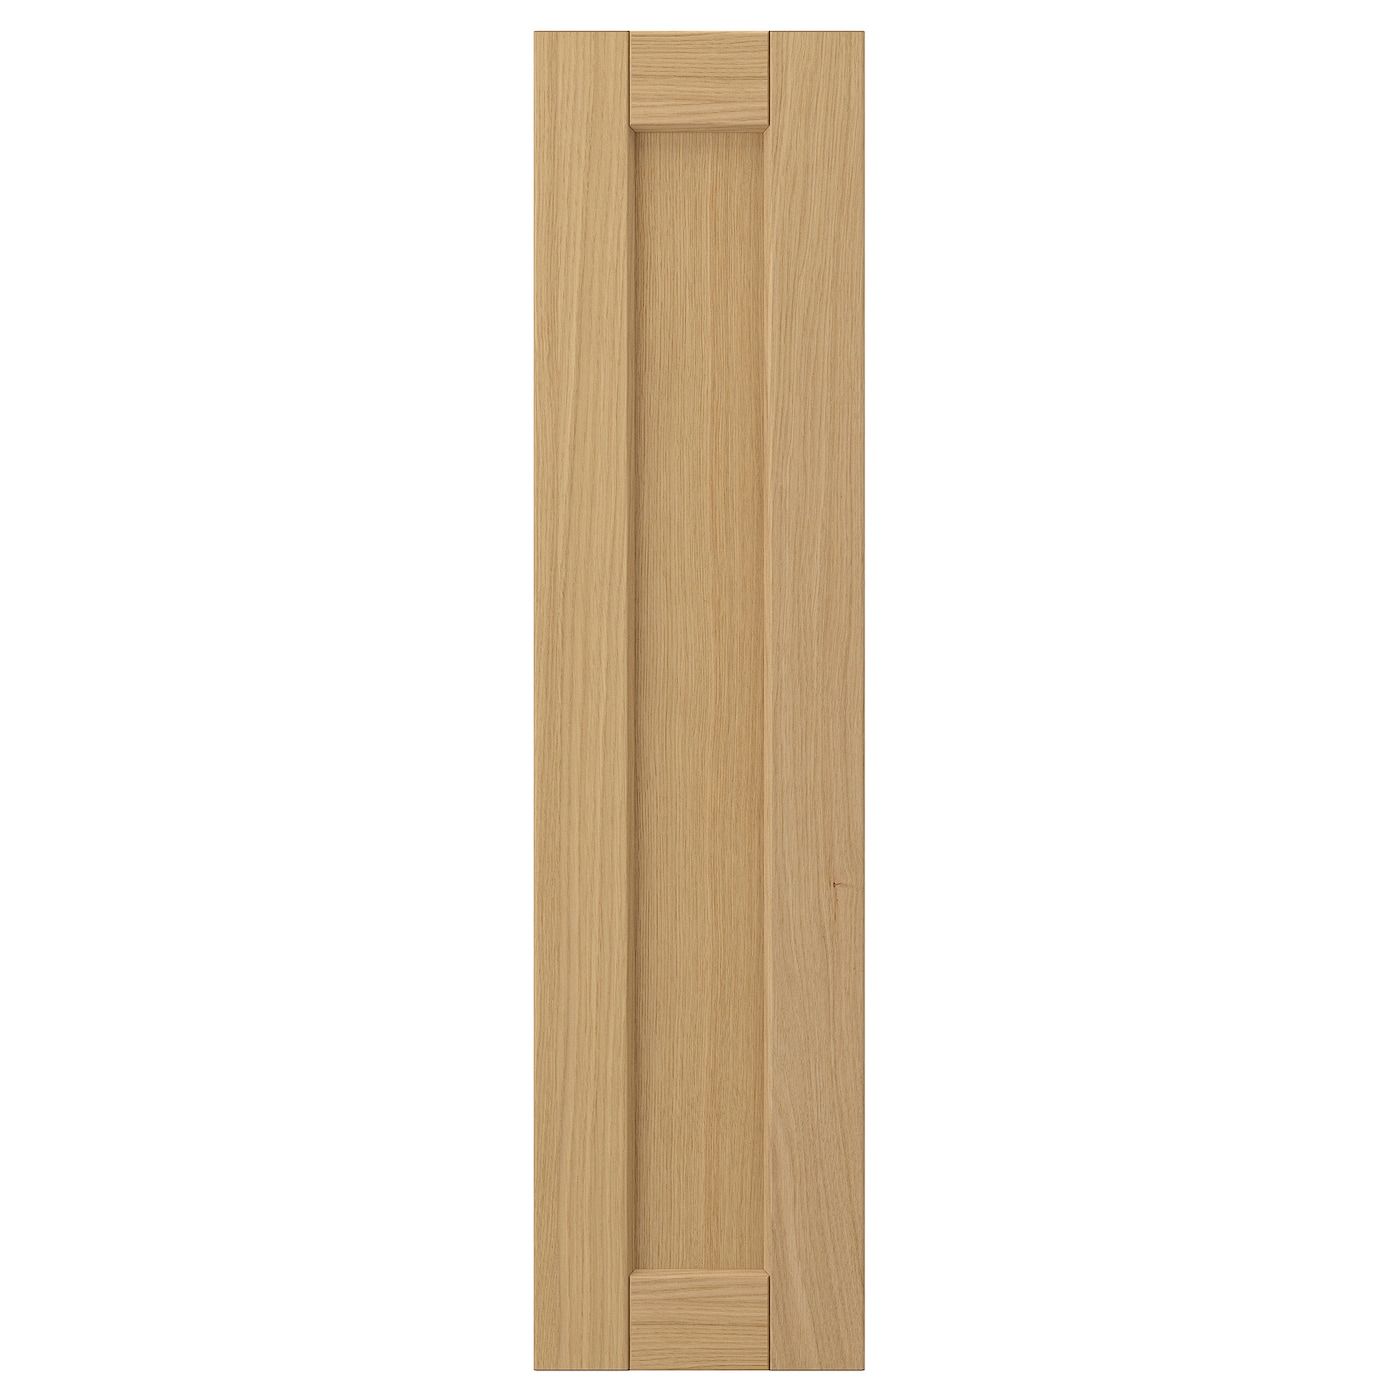 Дверца - FORSBACKA IKEA/ ФОРСБАКА ИКЕА,  80х20 см, под беленый дуб